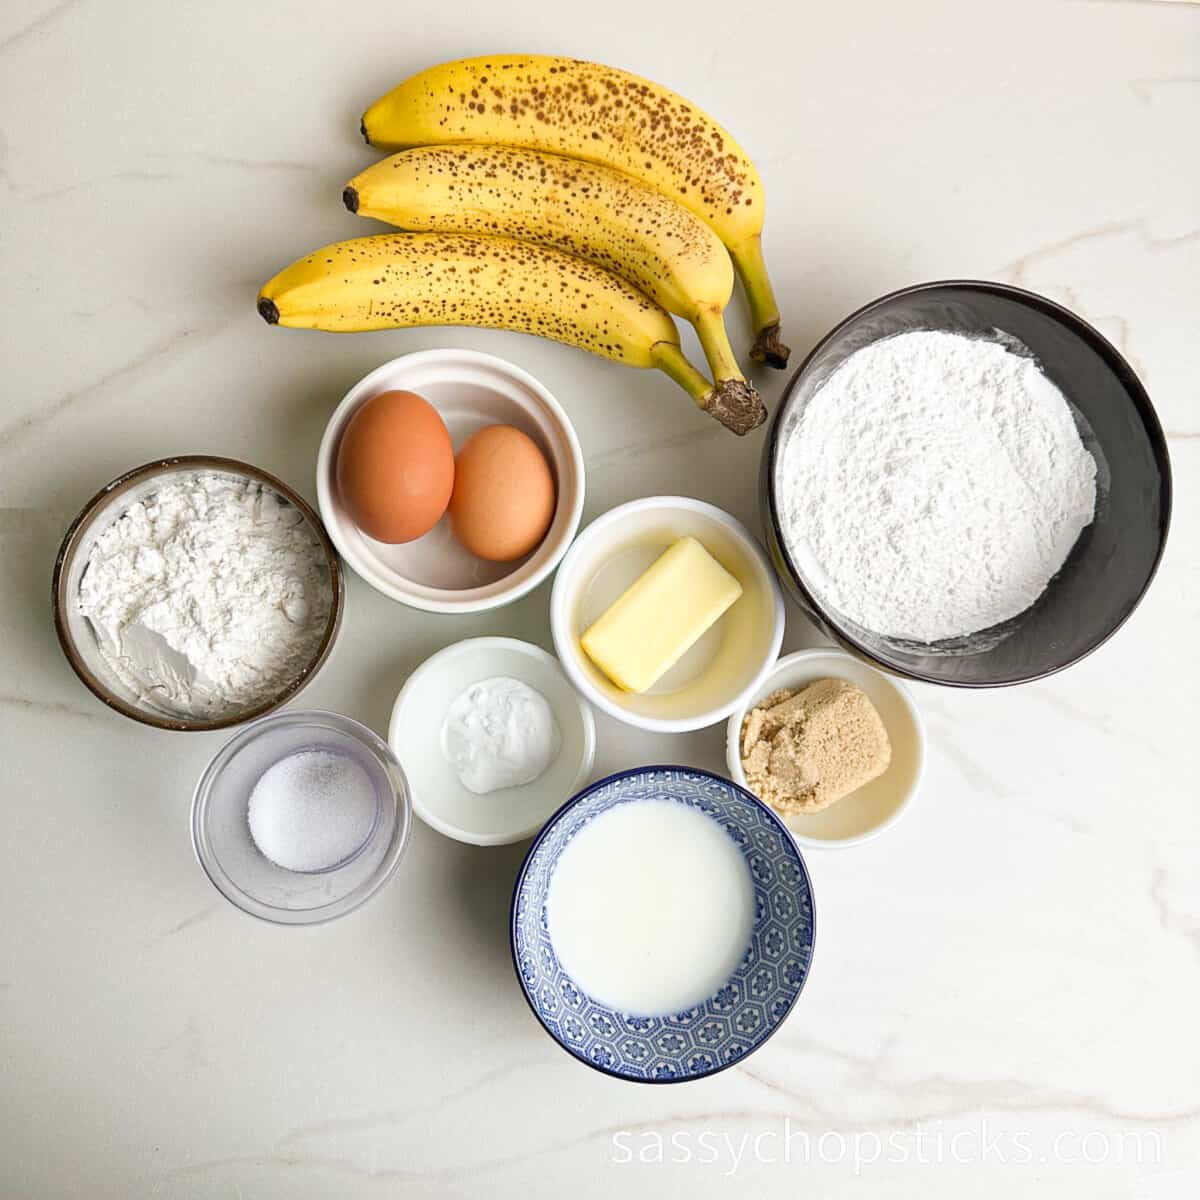 mochi banana bread ingredients